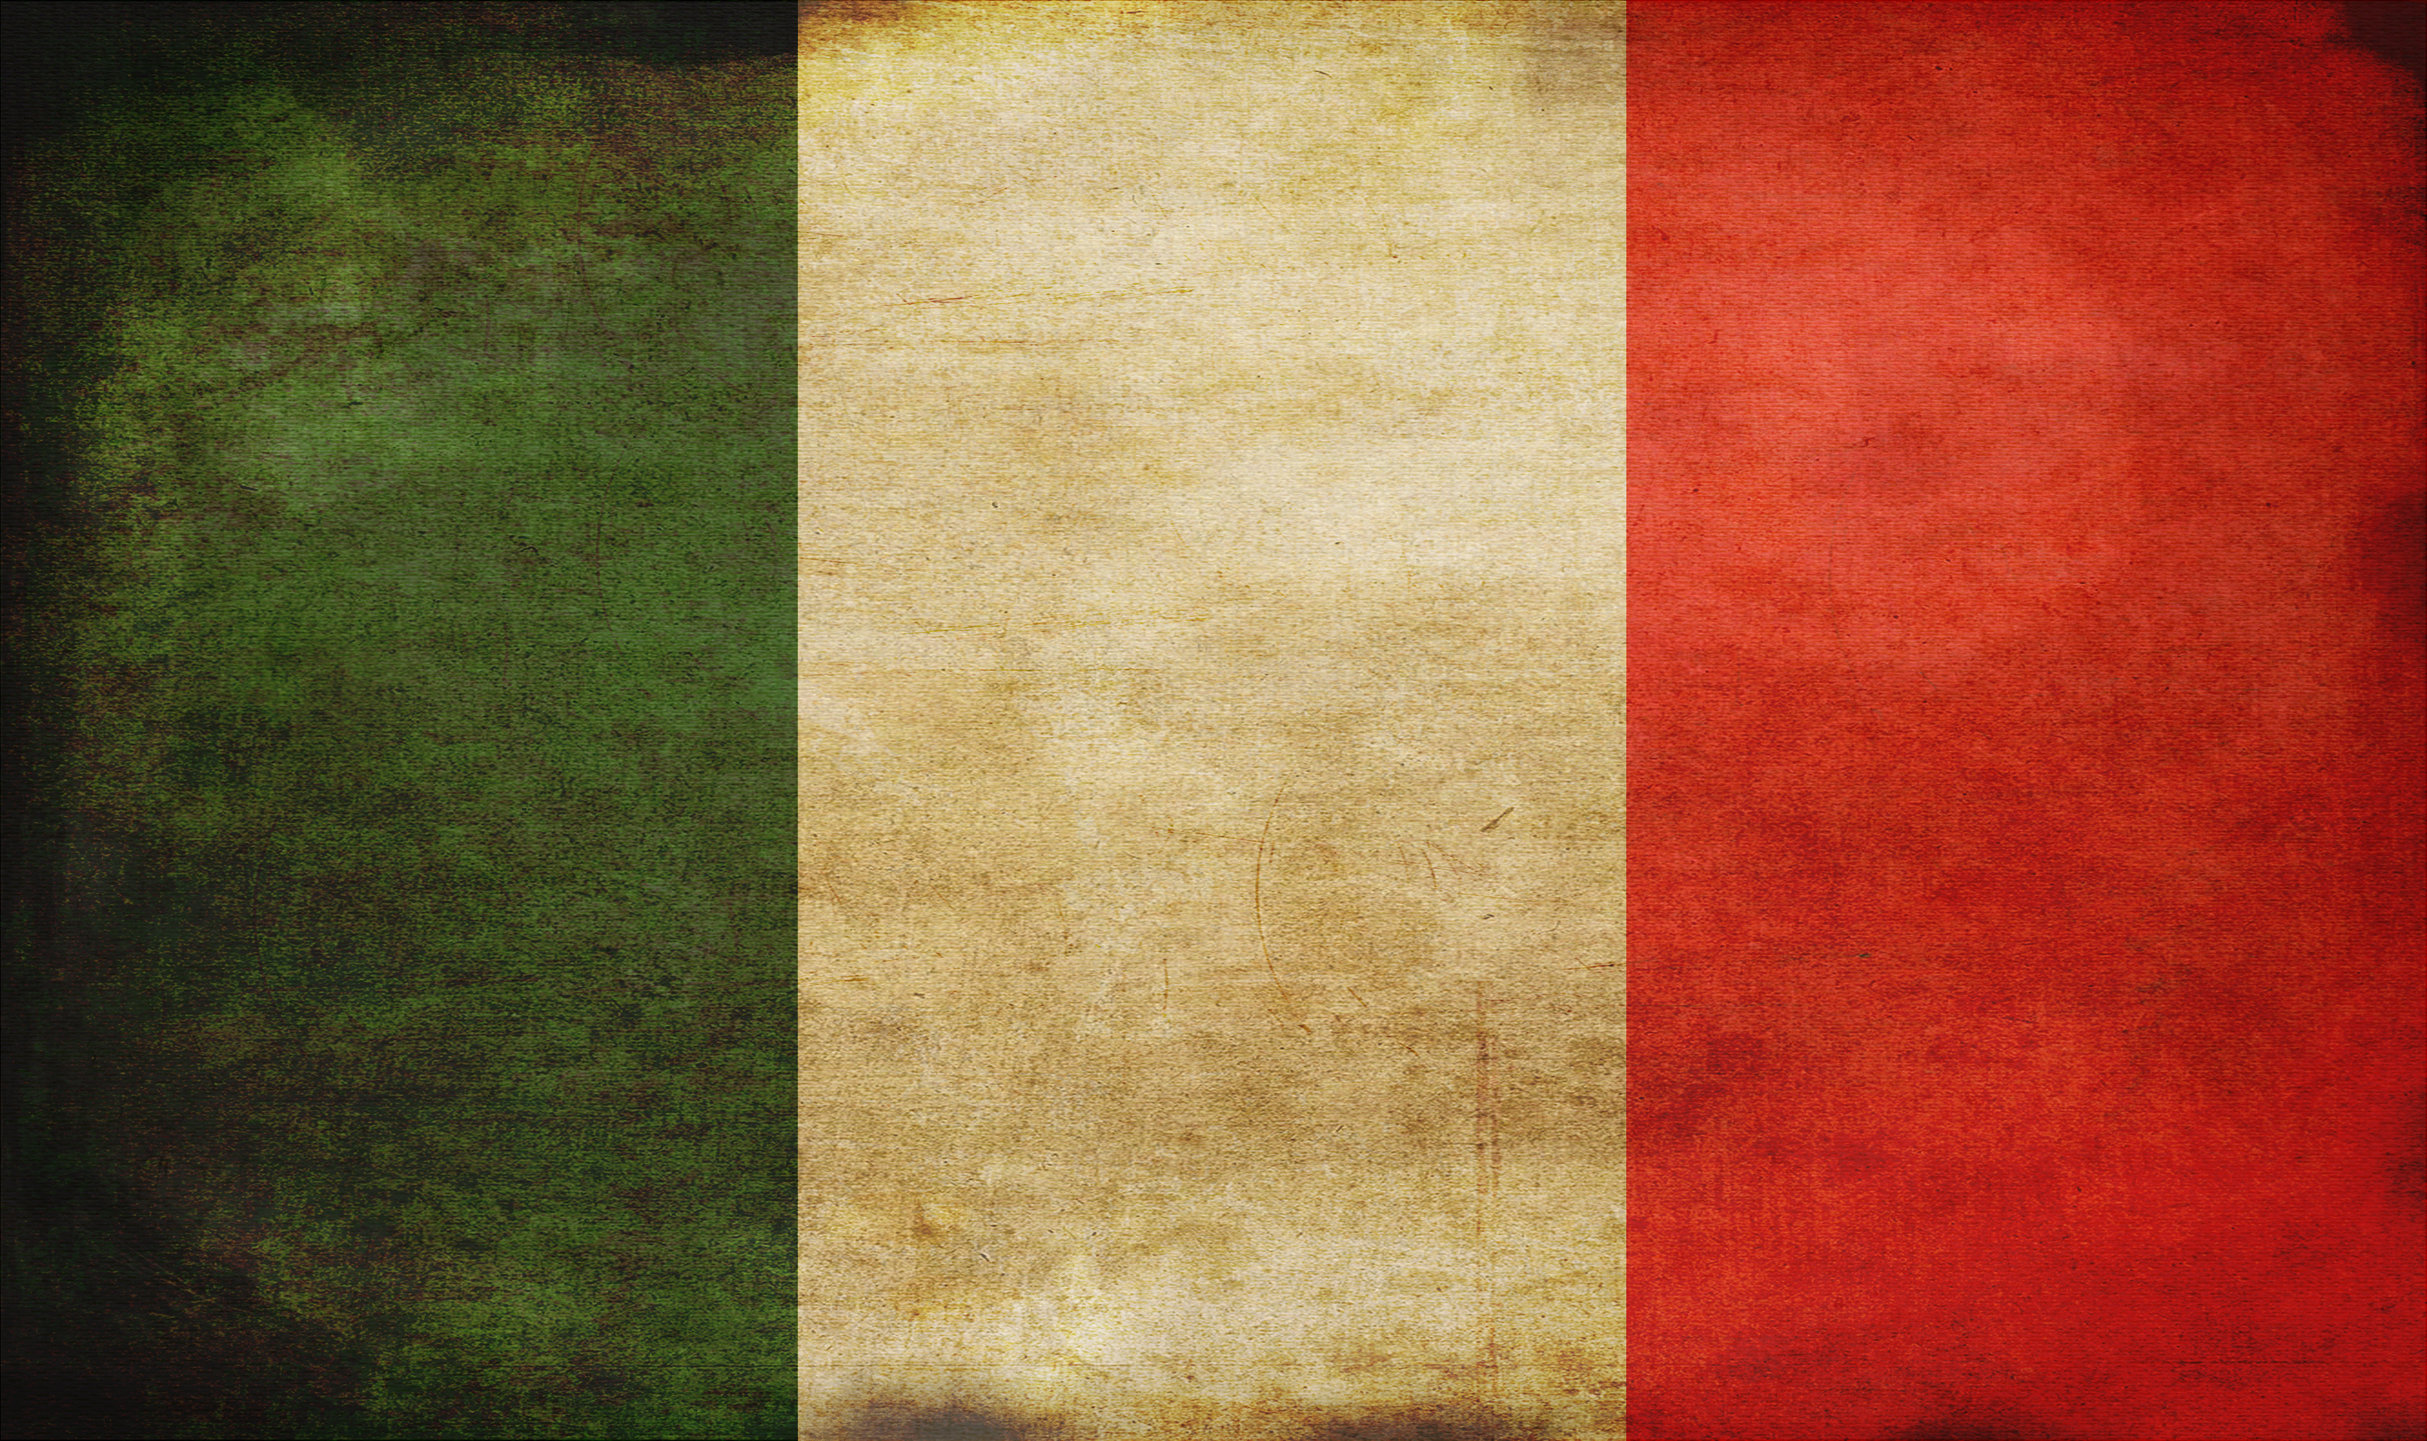 Italy - Grunge by tonemapped on DeviantArt